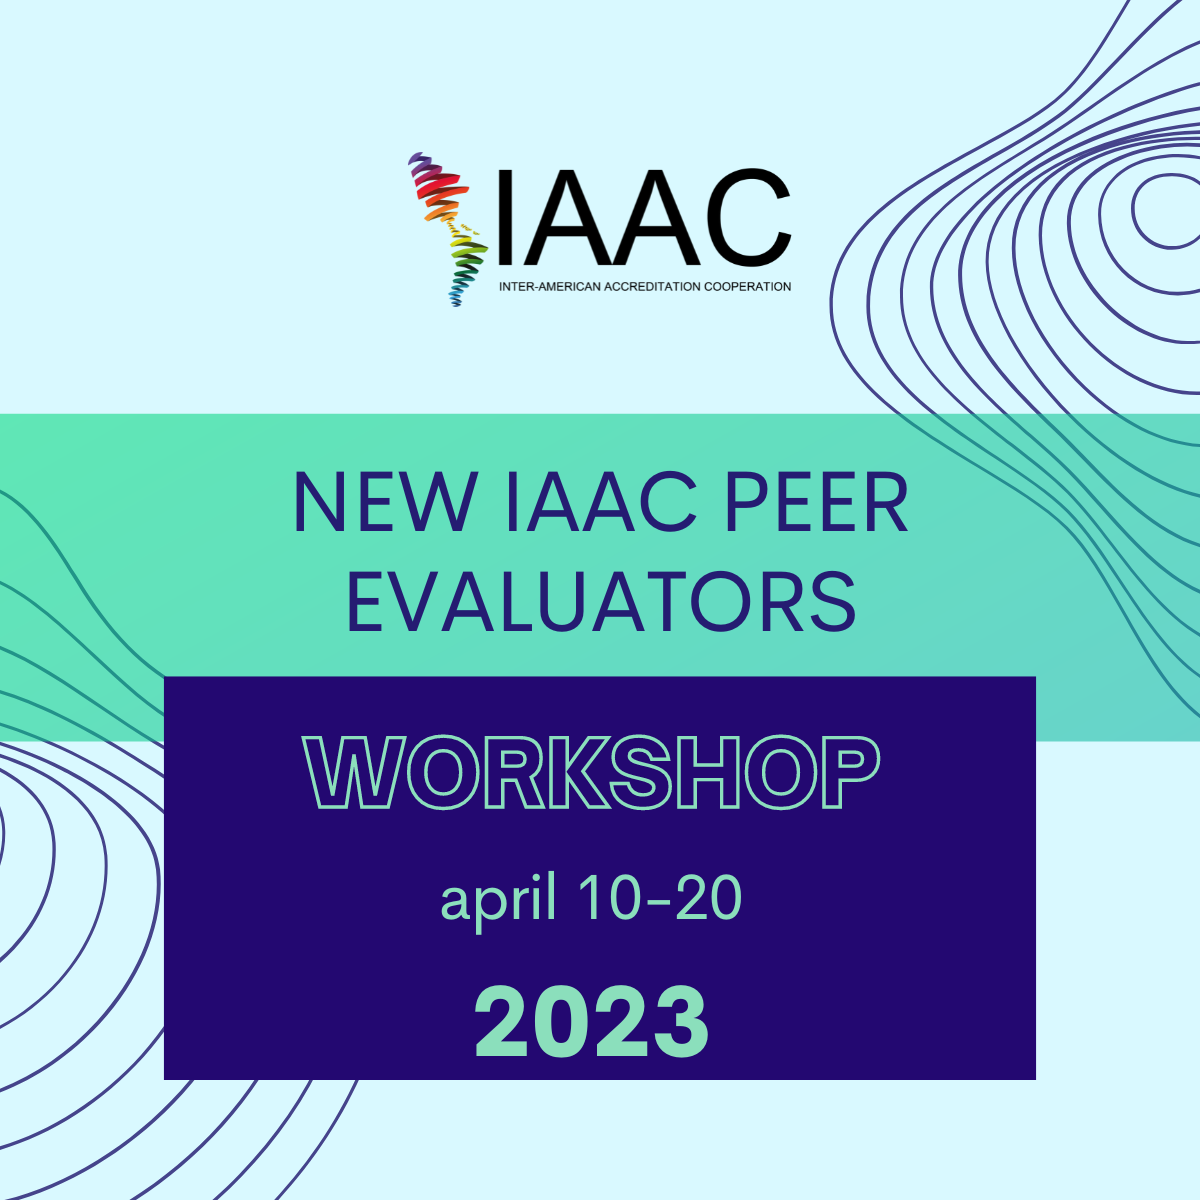 Training workshop for new IAAC Peer Evaluators